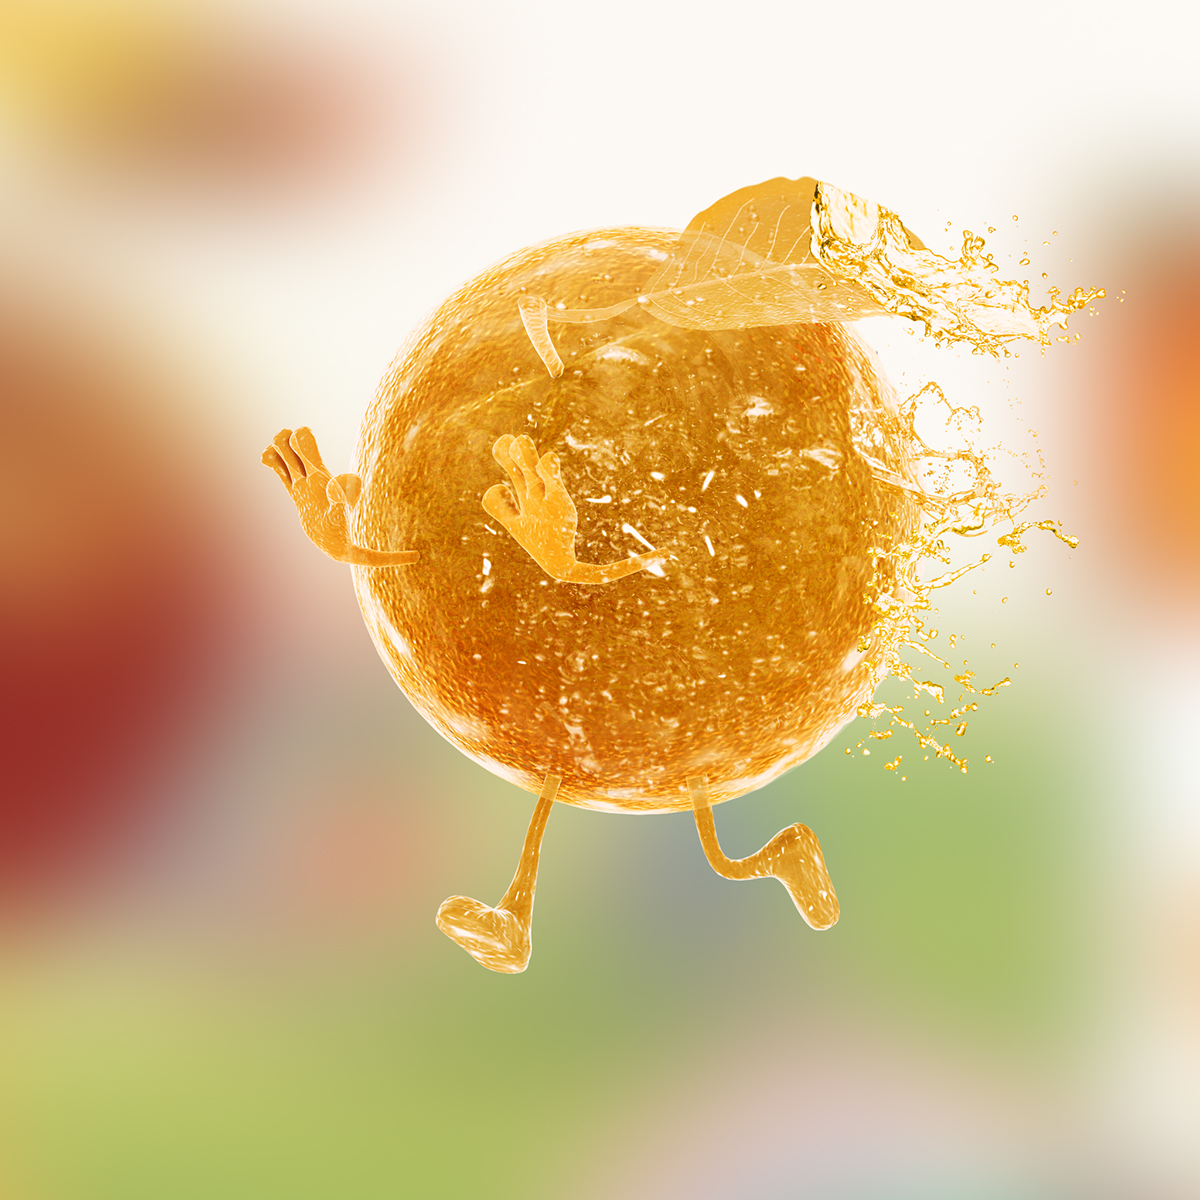 water fruits juicy print poster apple Mango orange Pear pose Character 3D